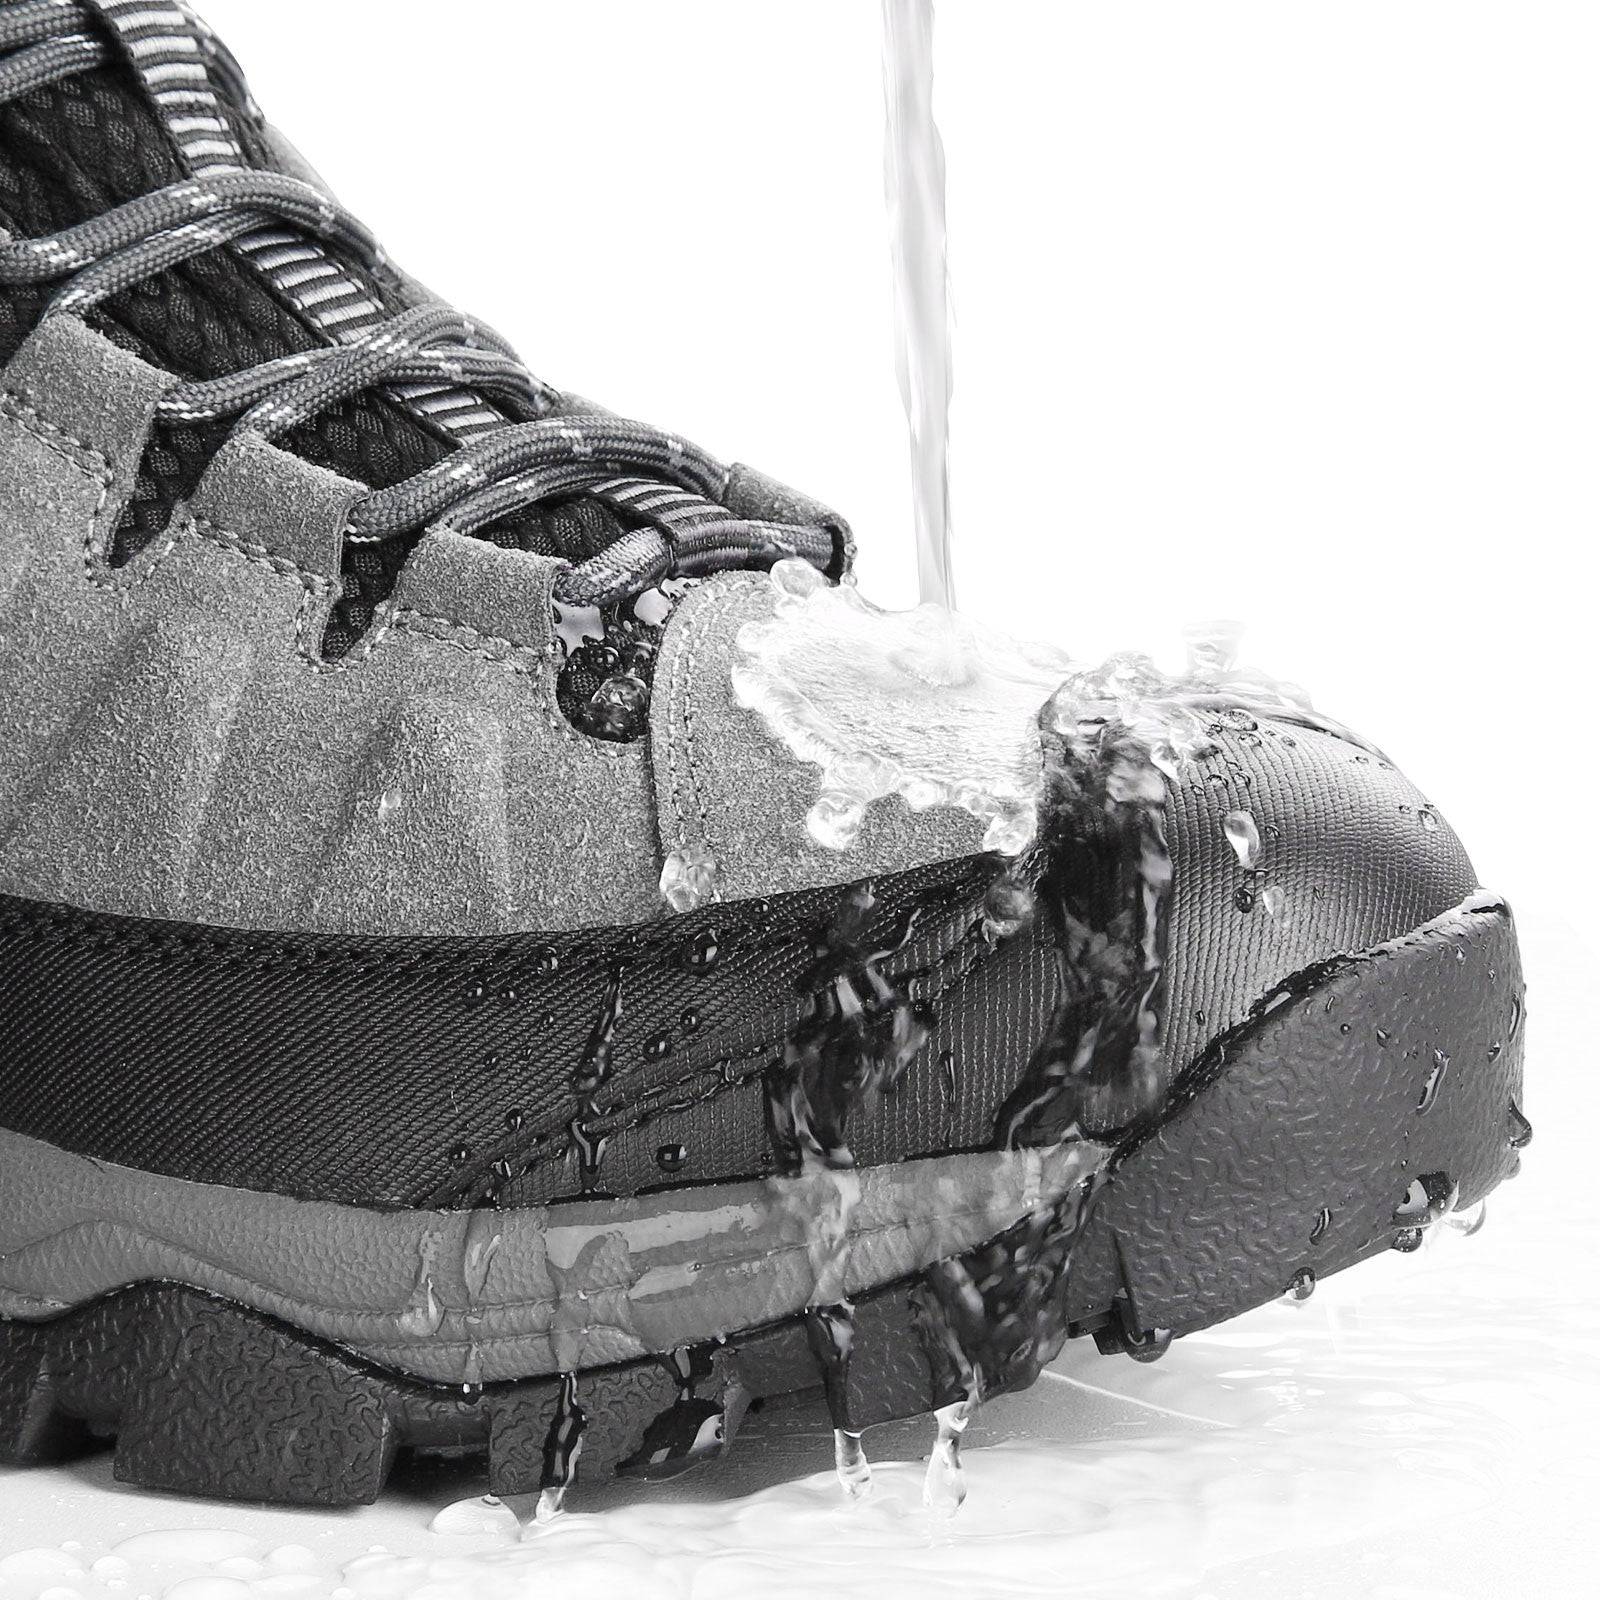 4.6" Men’s Lightweight Waterproof Hiking Boots